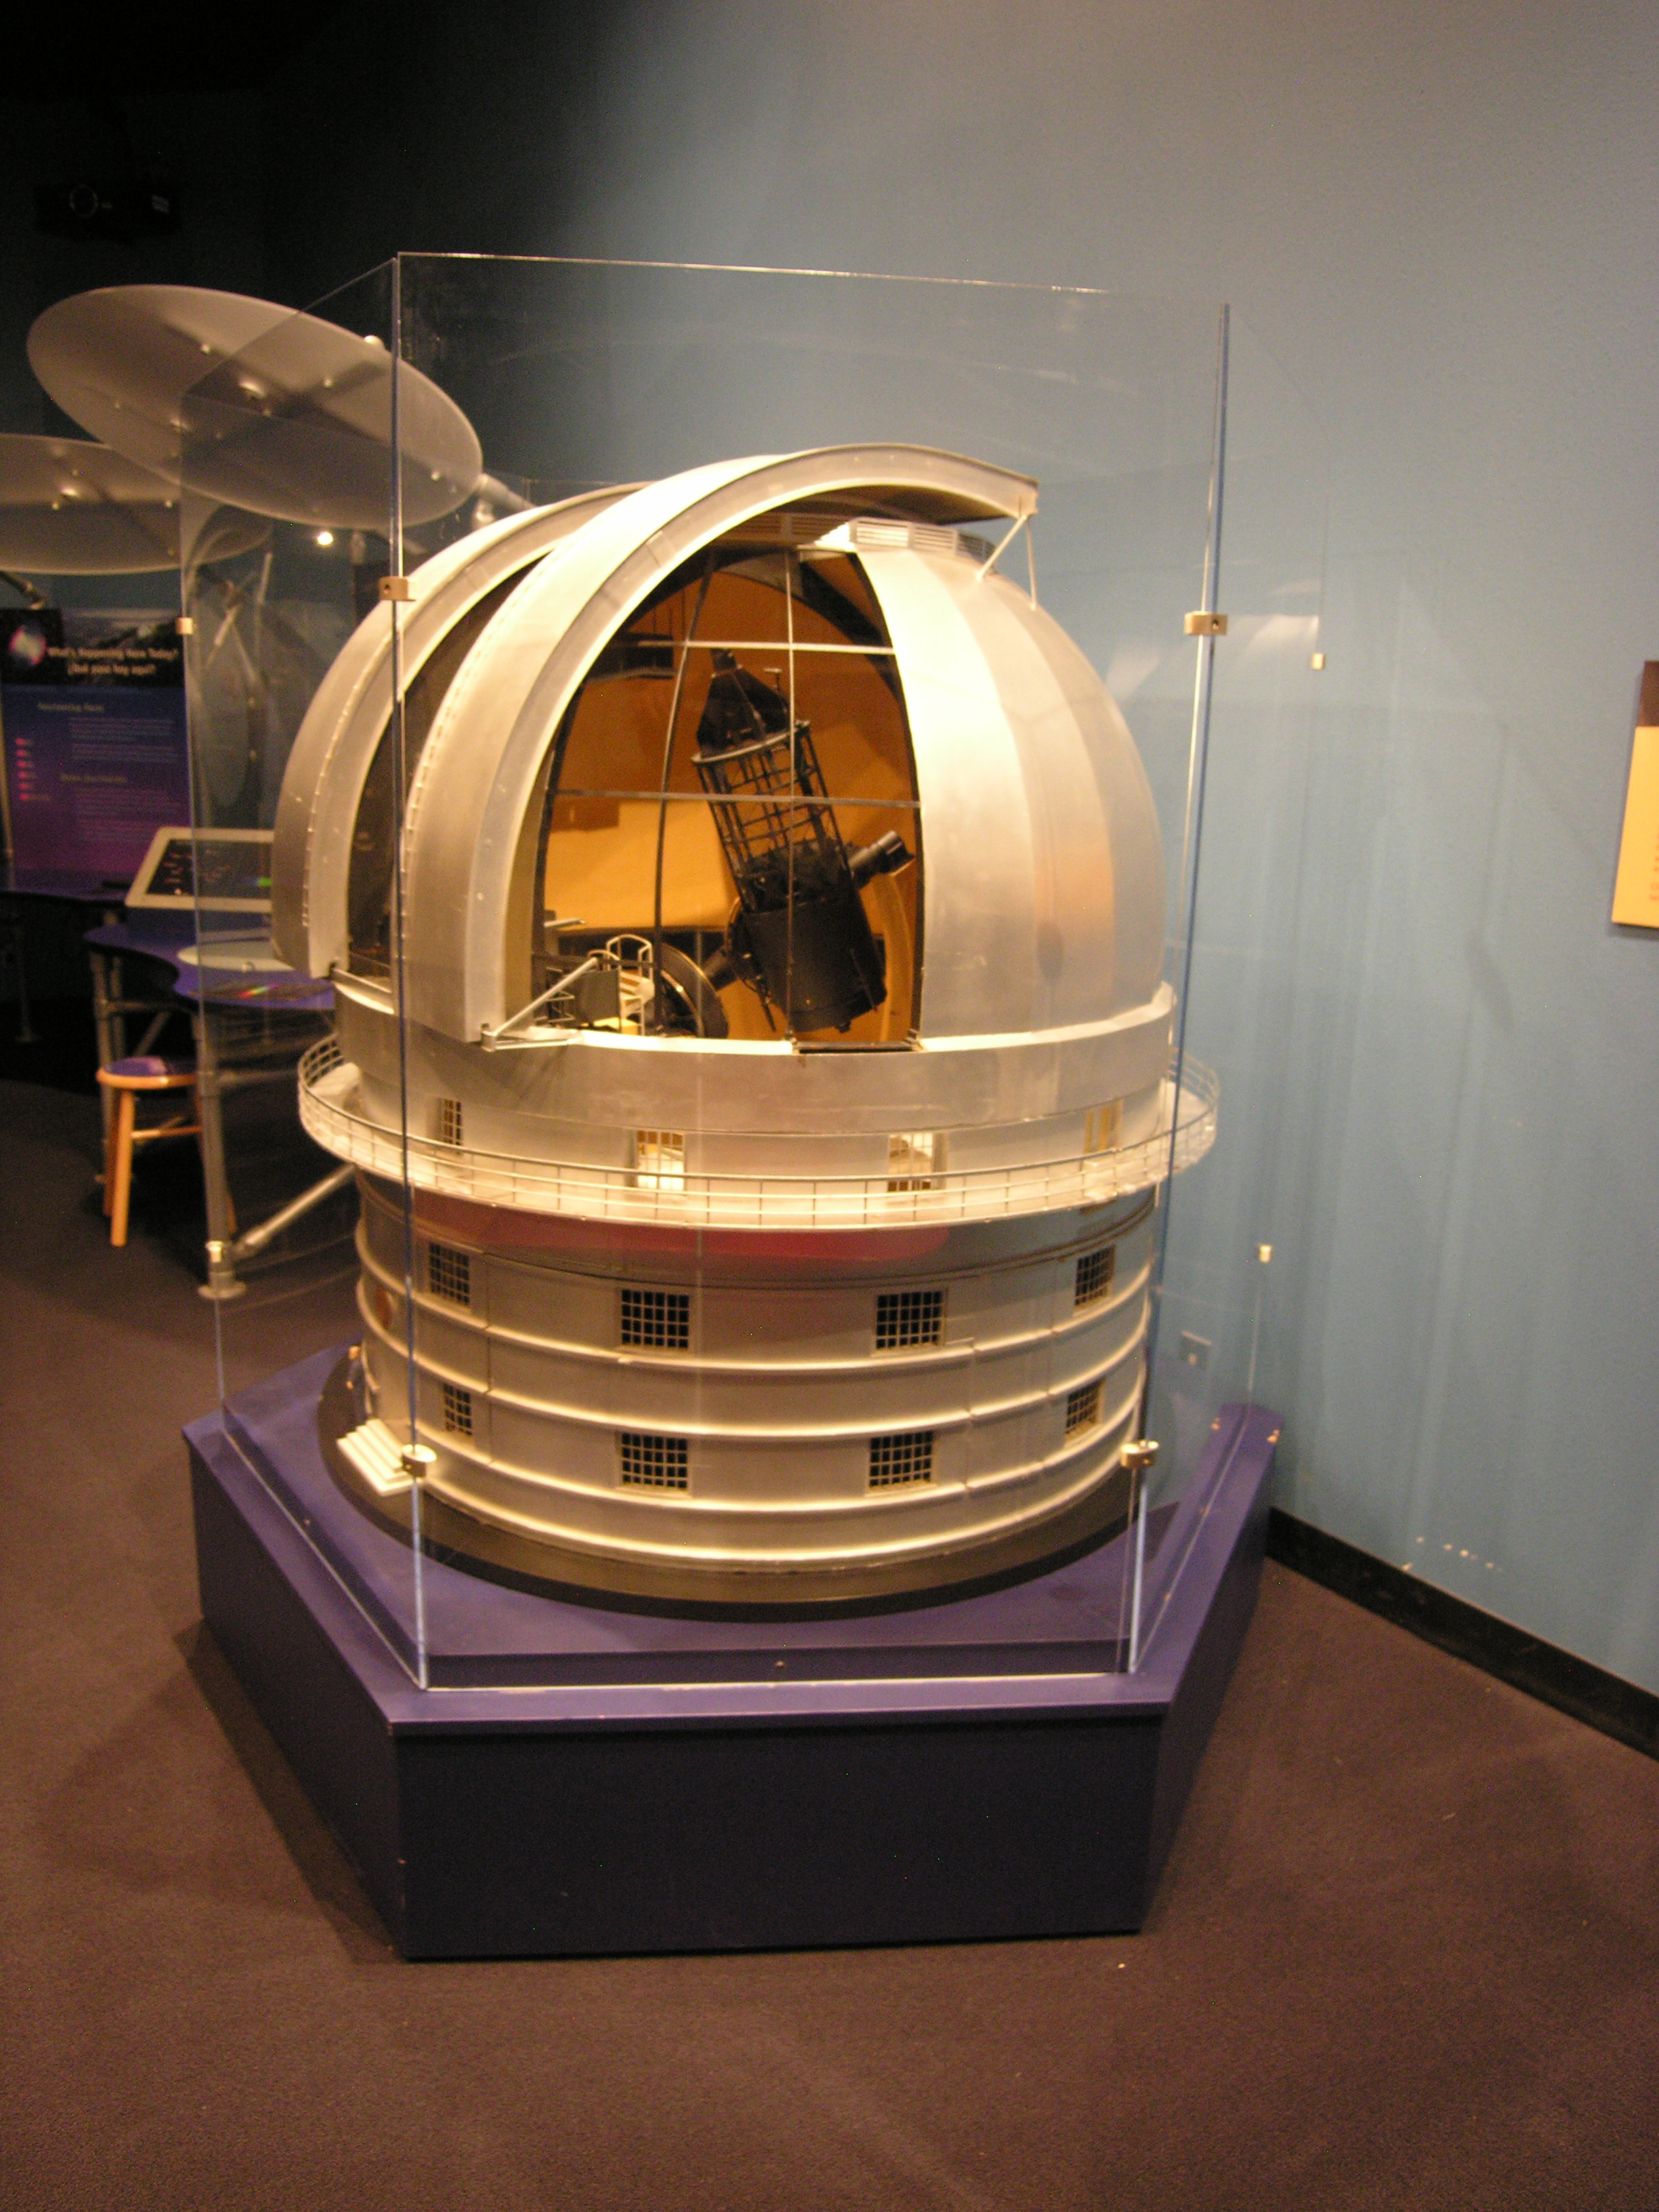 Struve Telescope model